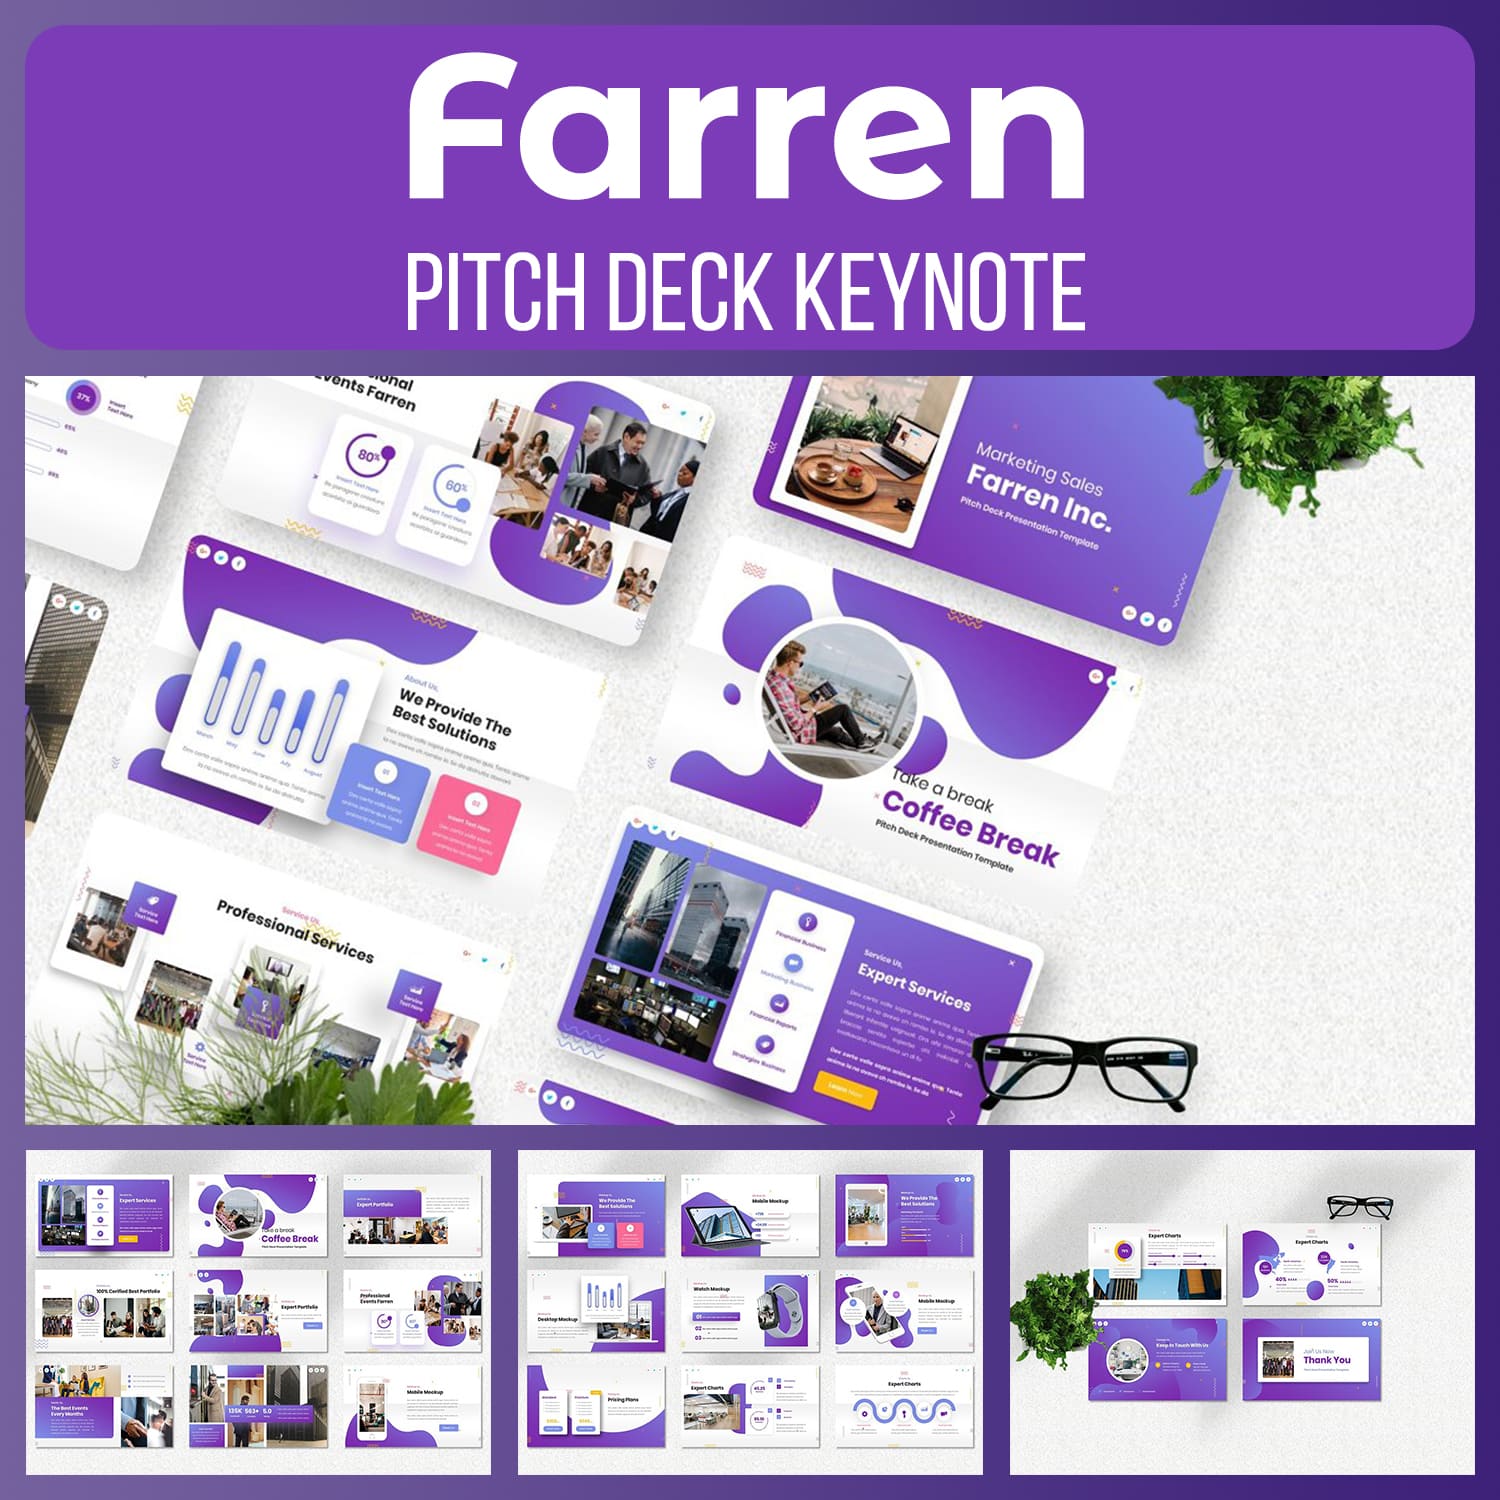 Farren - Pitch Deck Keynote main cover.